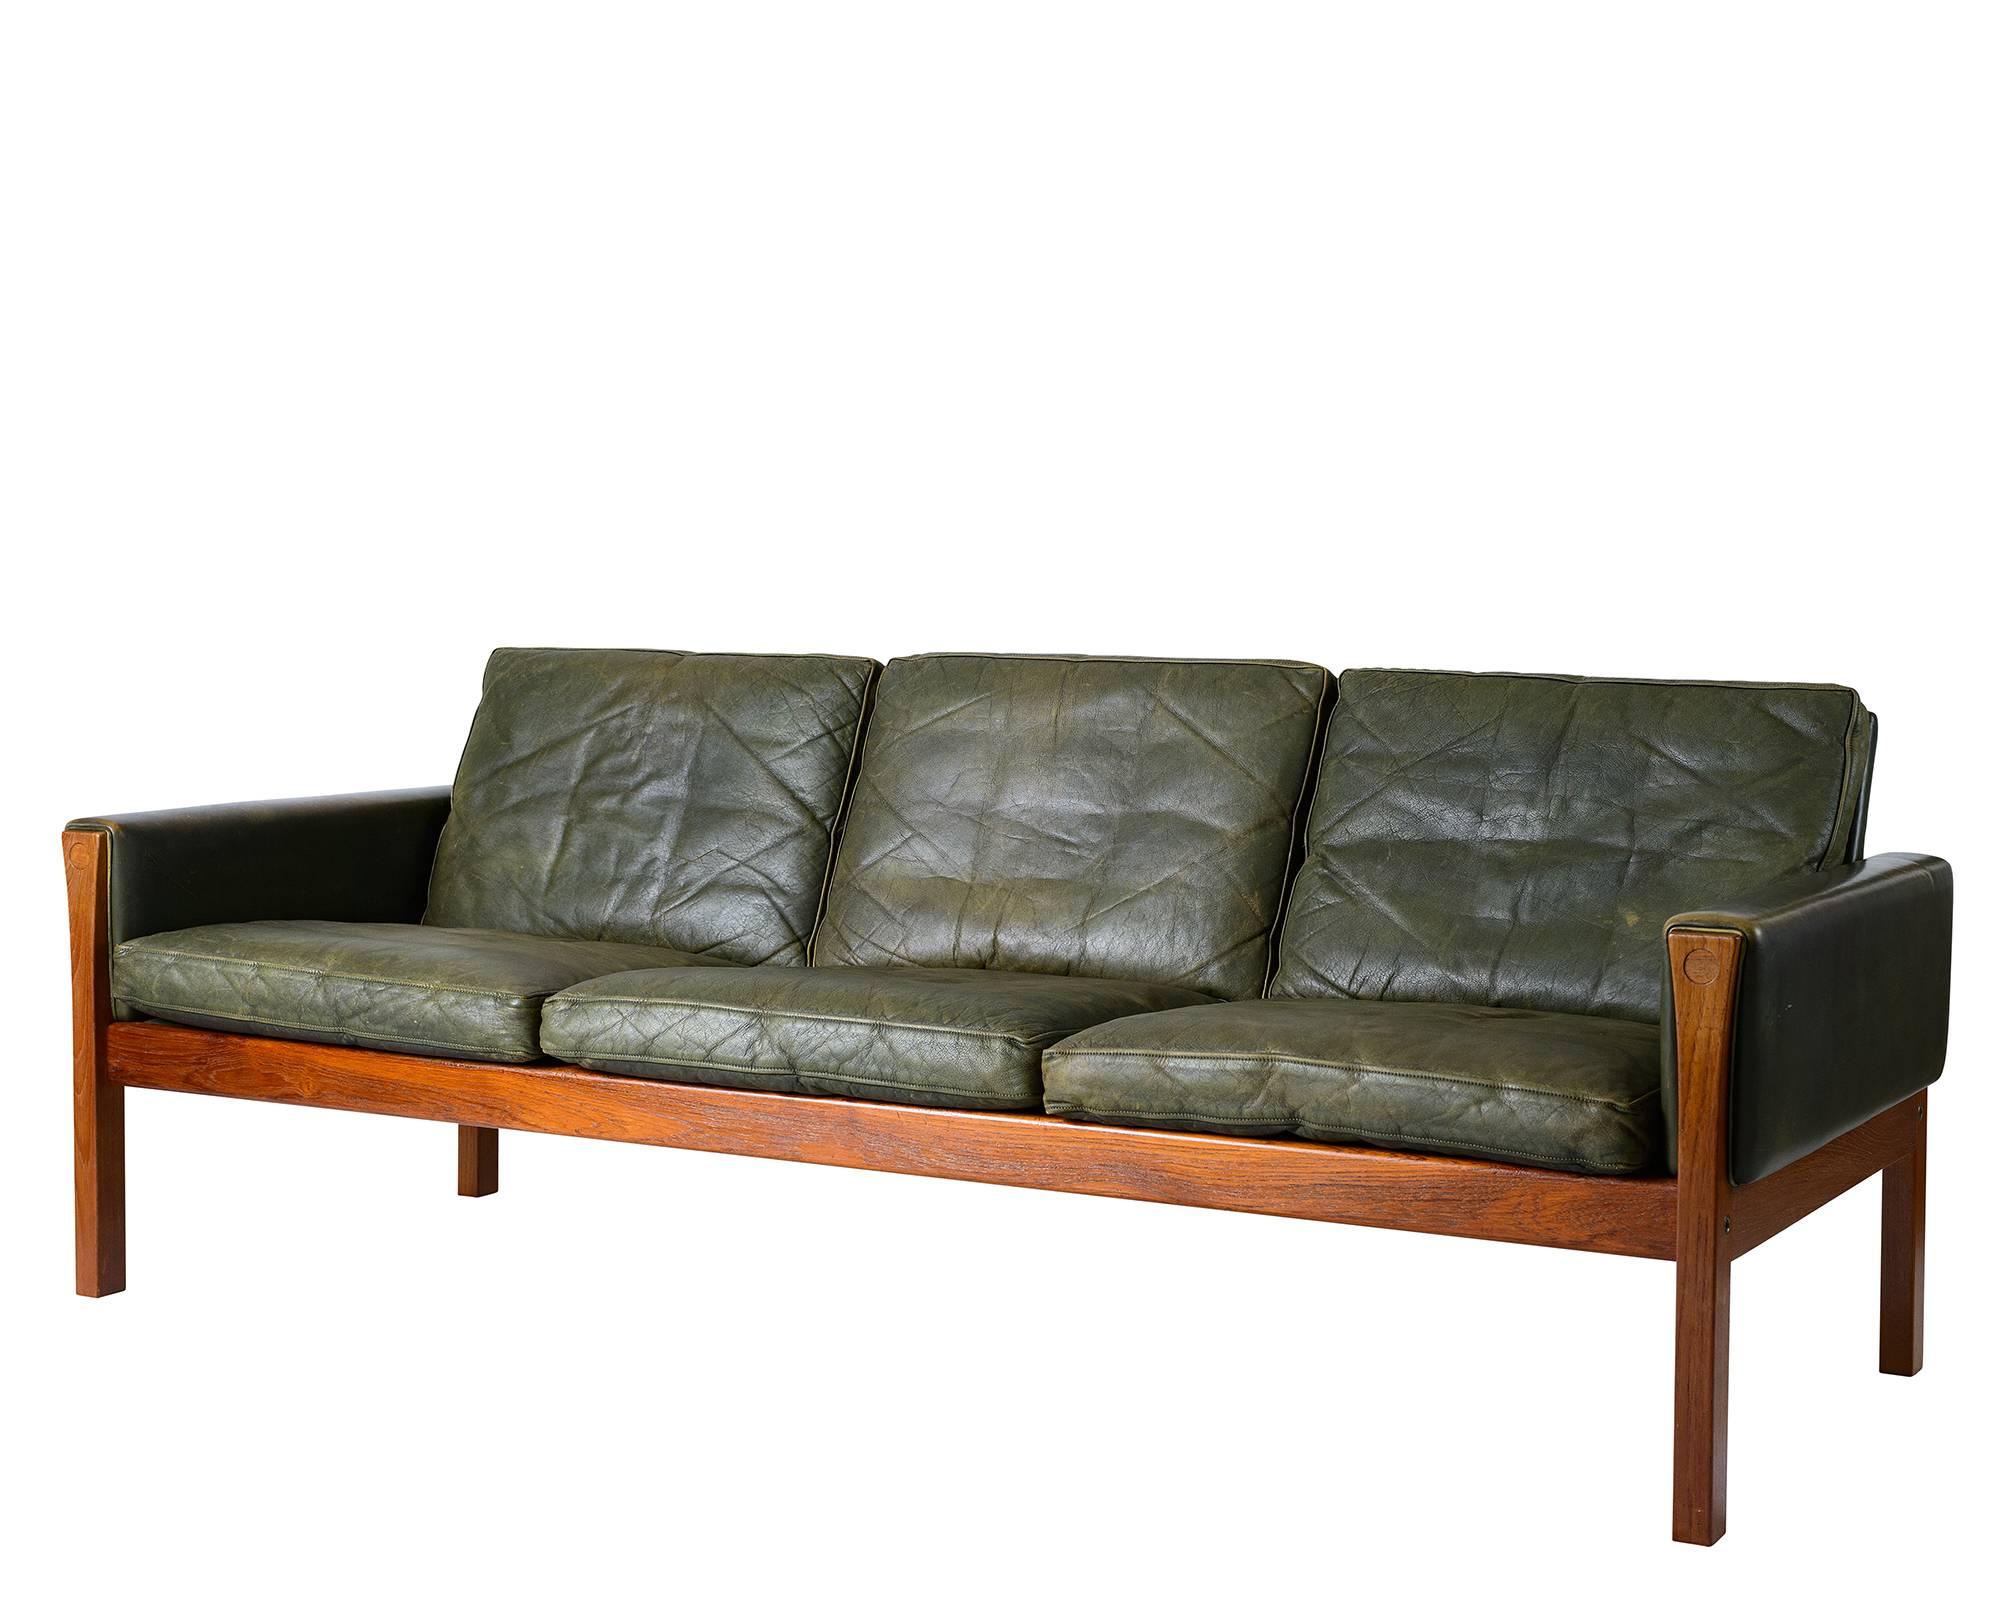 Hans Wegner AP-62 sofa designer in 1960 and produced by AP Stolen.